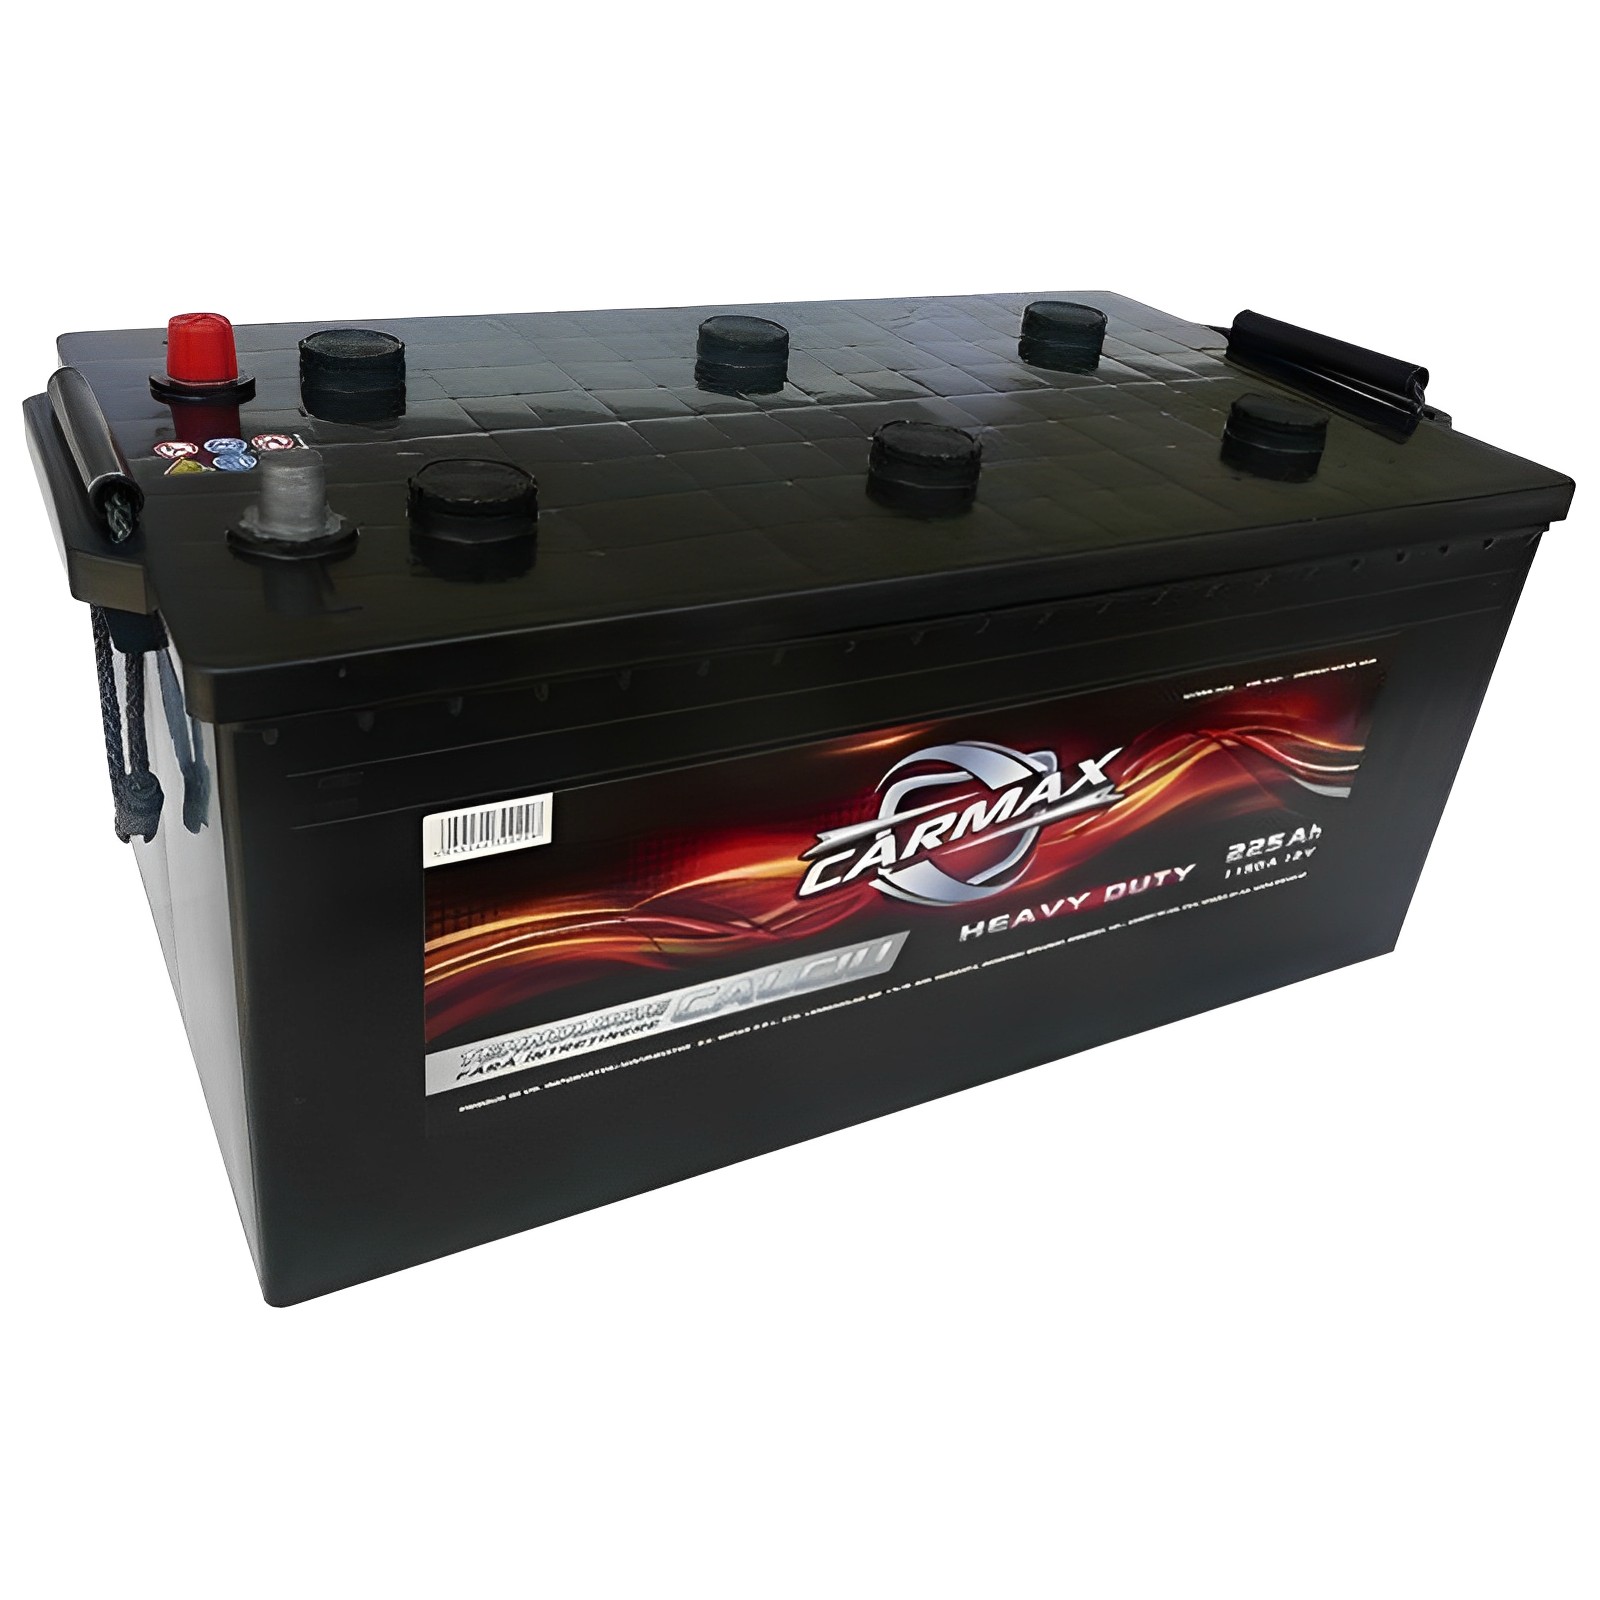 Baterie auto Carmax IdealStore, Capacitate 225Ah,12V, Recomandata camioanelor